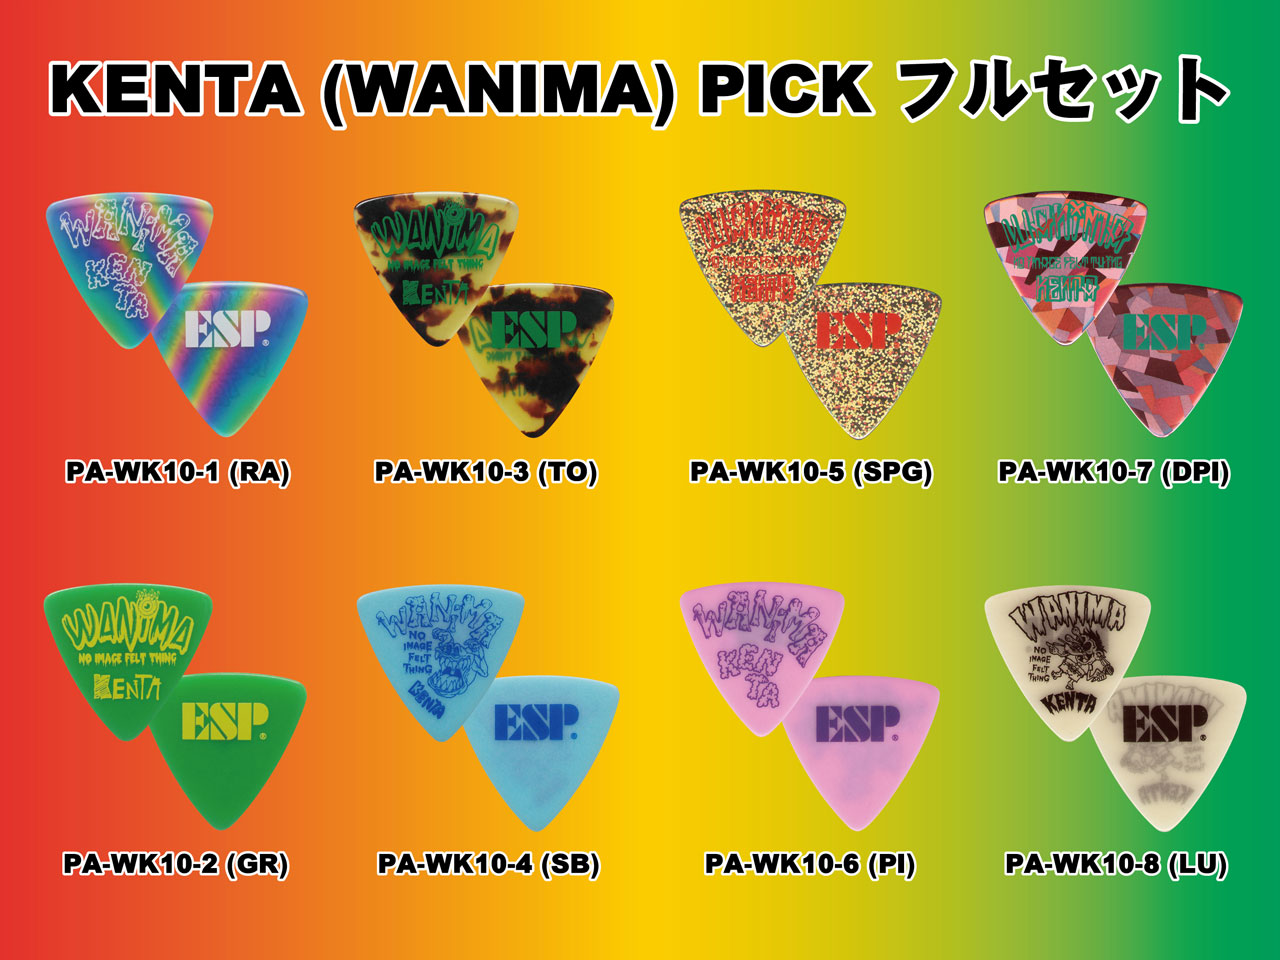 ESP(イーエスピー) Artist Pick Series KENTA Pick フルセット全8種 